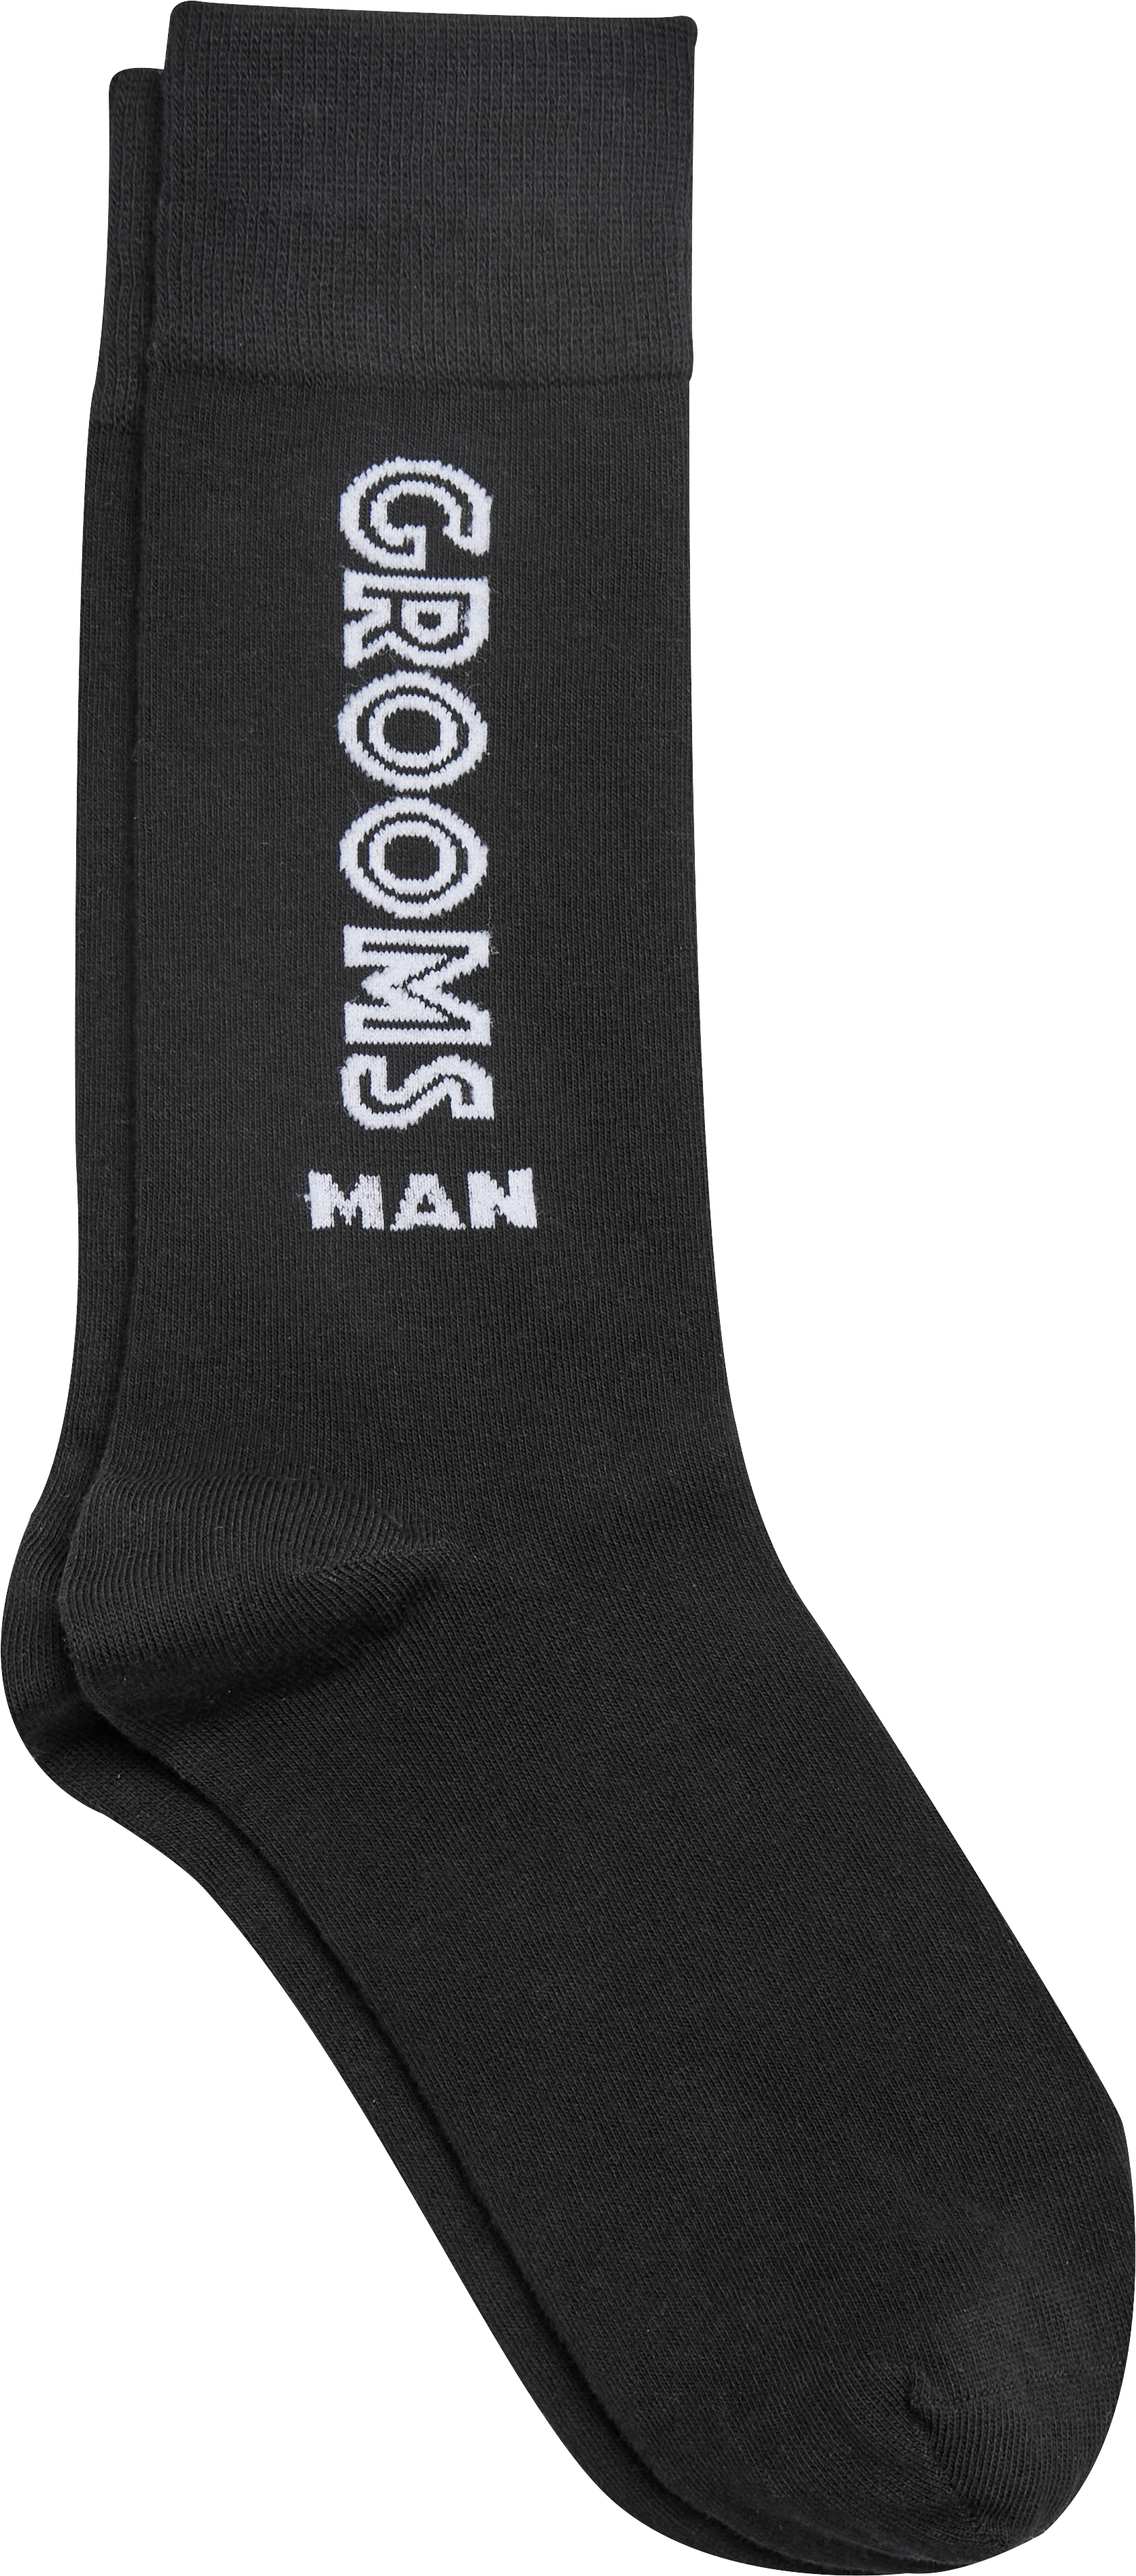 Mid-Calf Grooms Man Socks